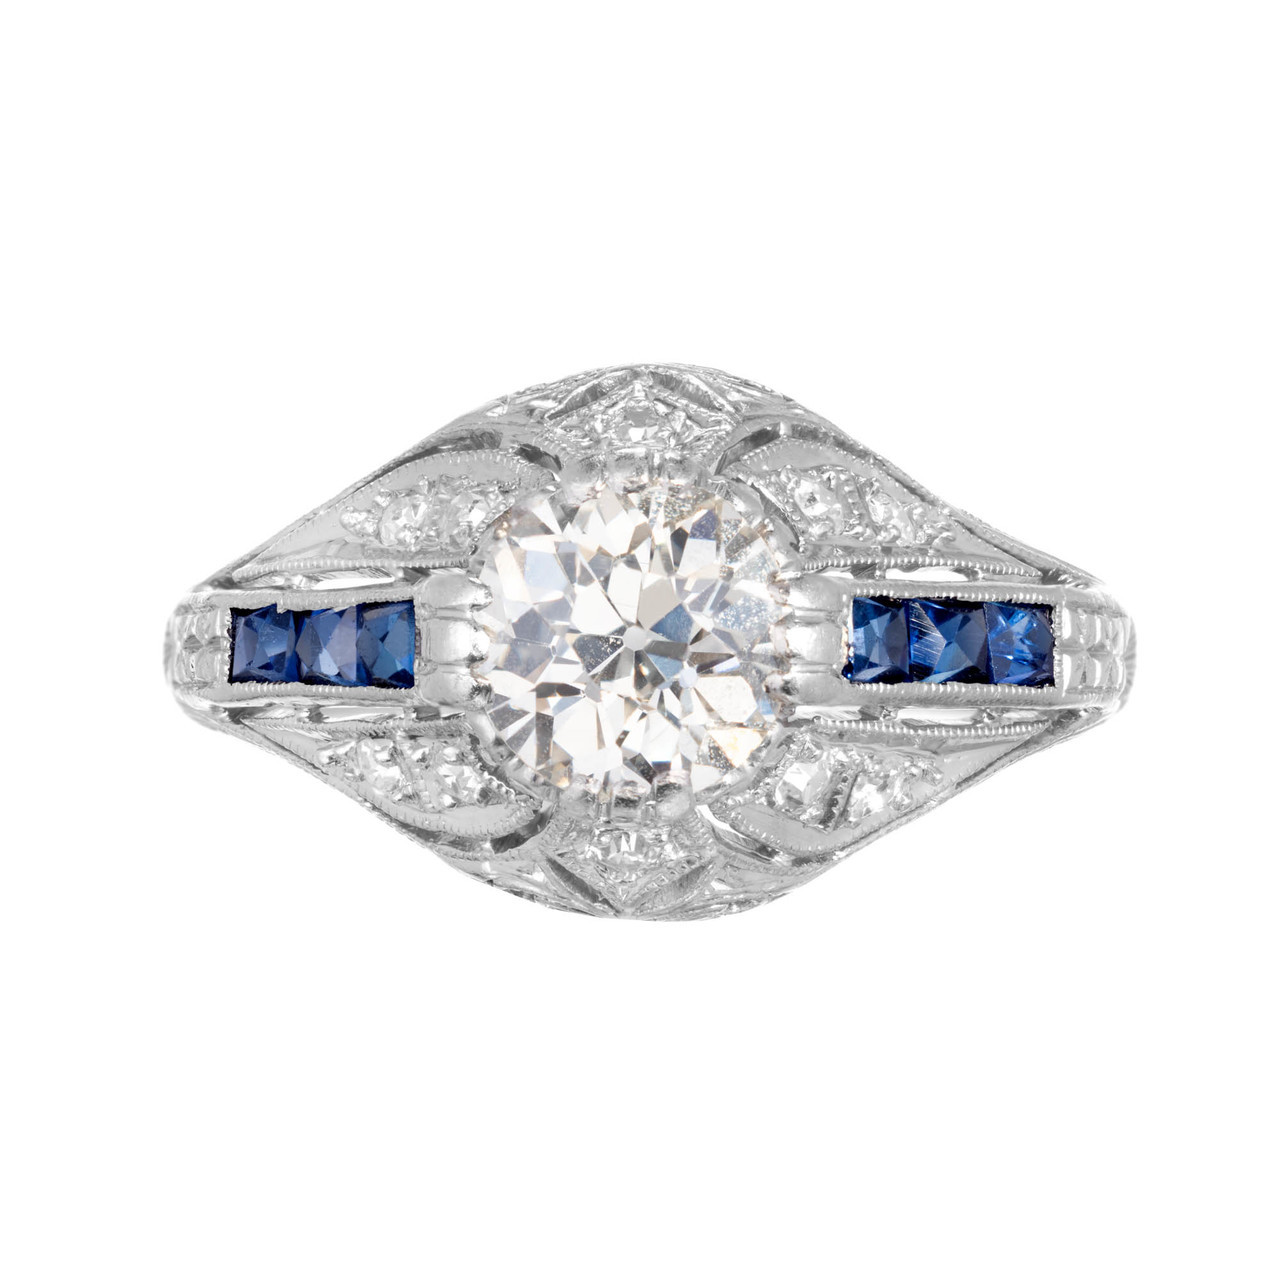 1930's Art Deco Diamond Engagement Ring Platinum 1.85ct K/VS2 GIA